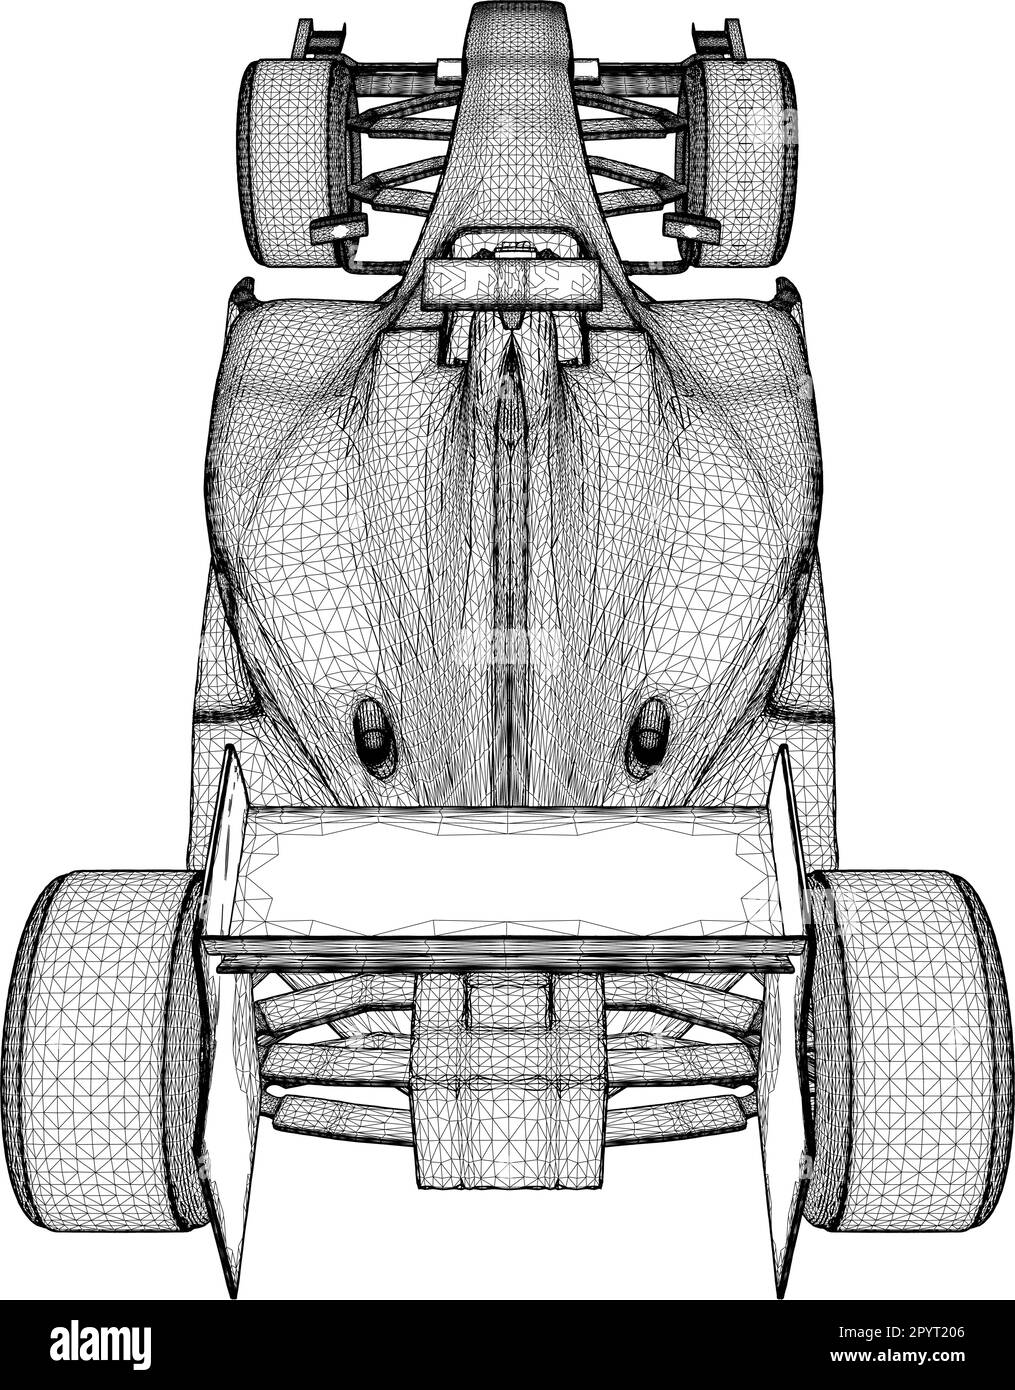 Race Car Vector. Illustration Isolated On White Background. A vector illustration Of An Race Sport Car. Stock Vector